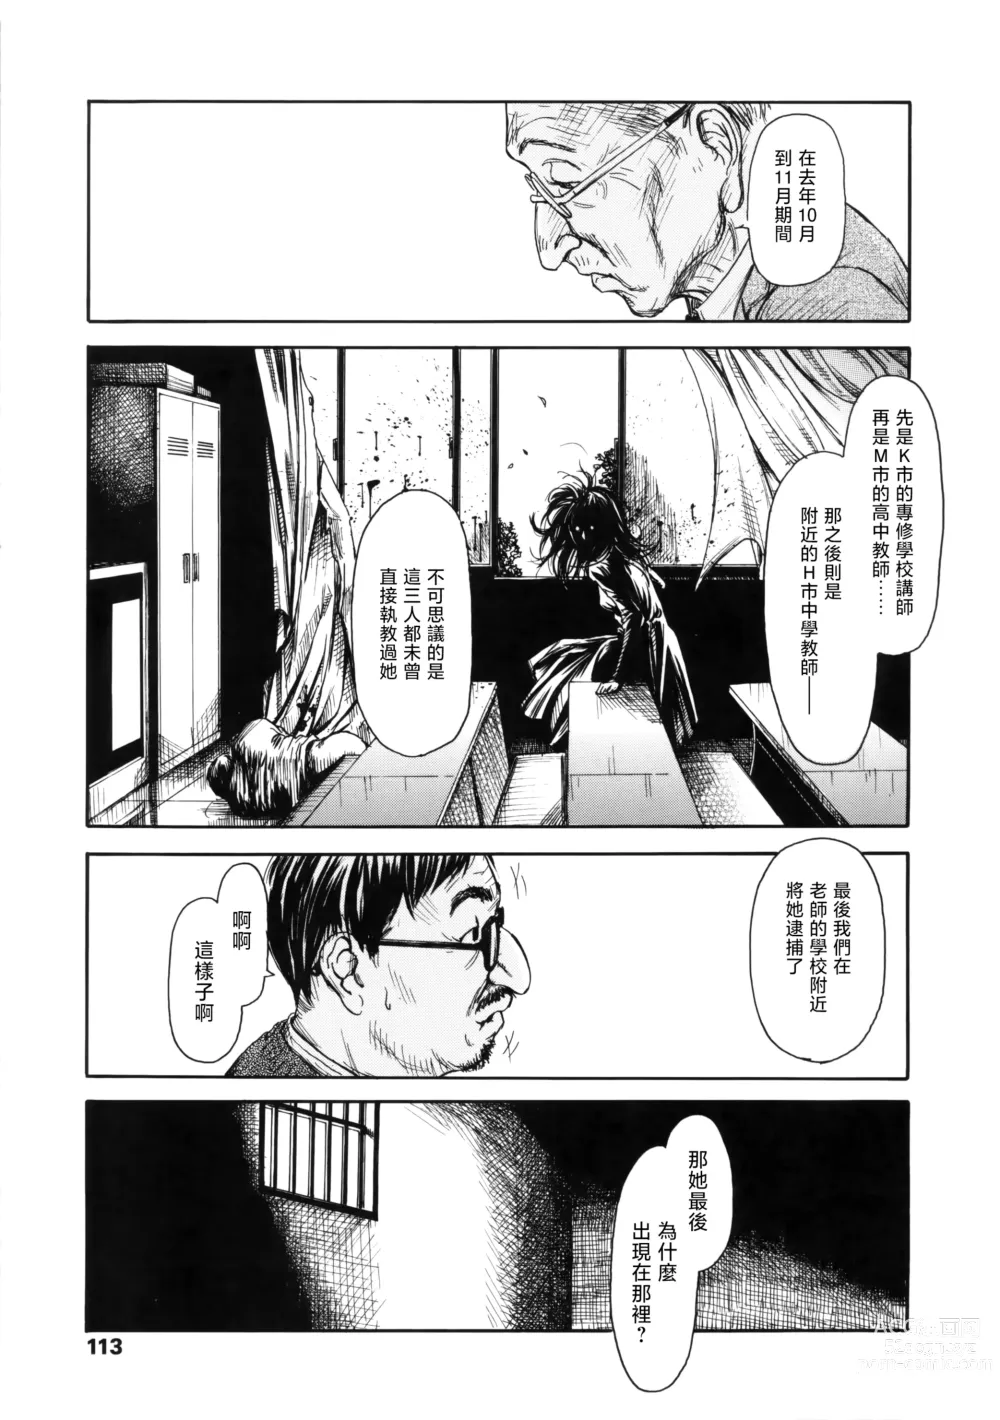 Page 13 of manga Mezame